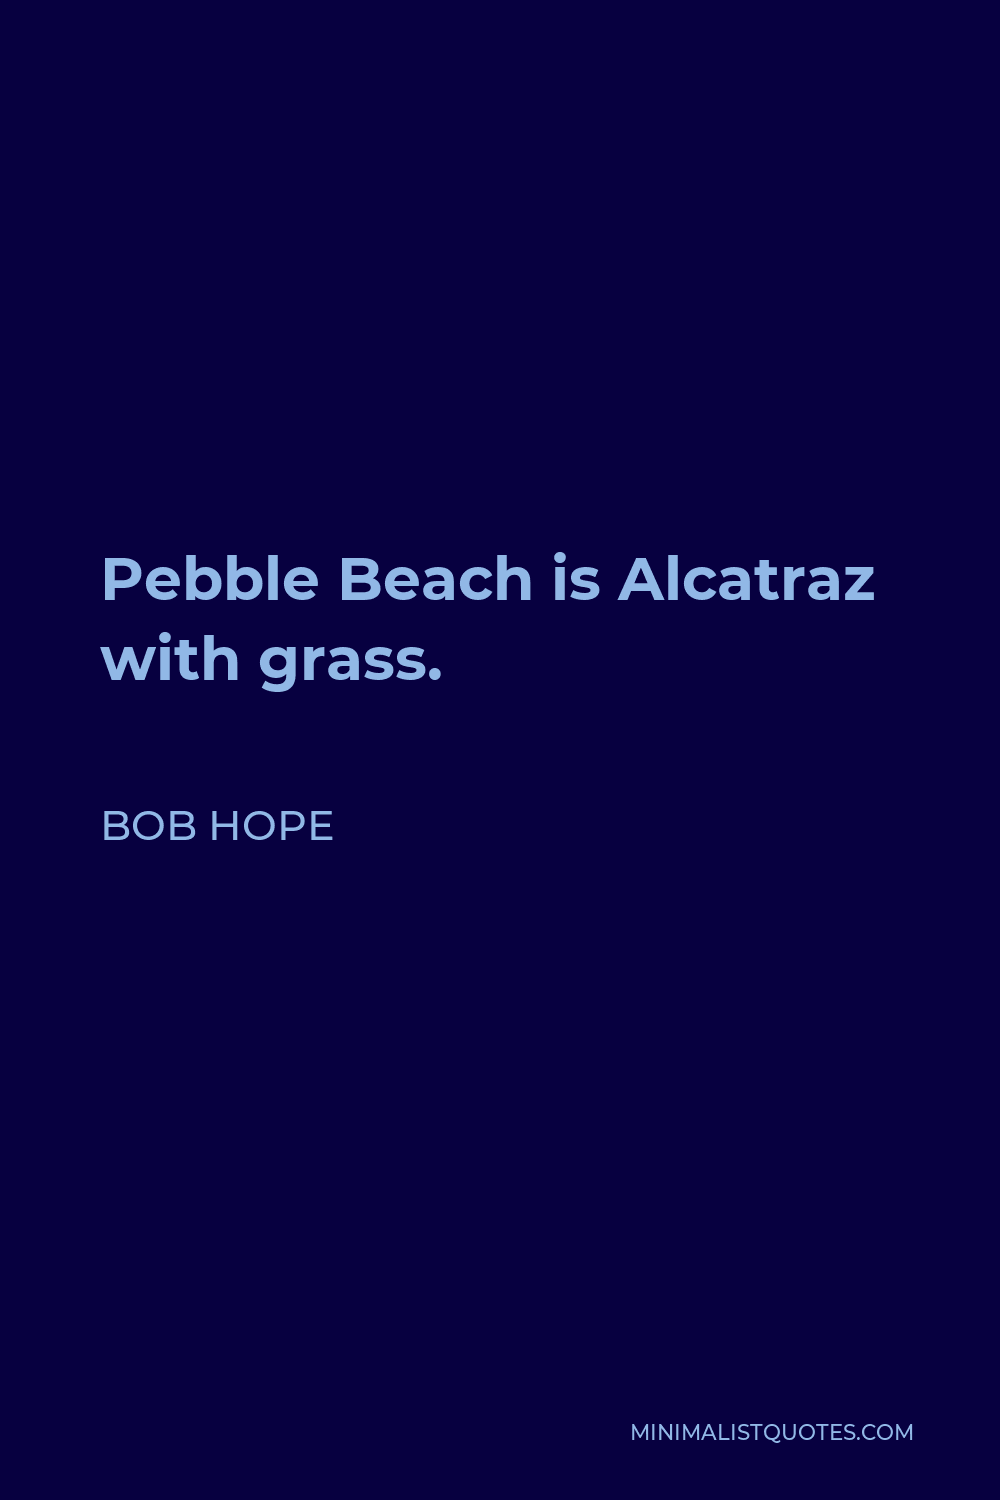 Bob Hope Quote - Pebble Beach is Alcatraz with grass.